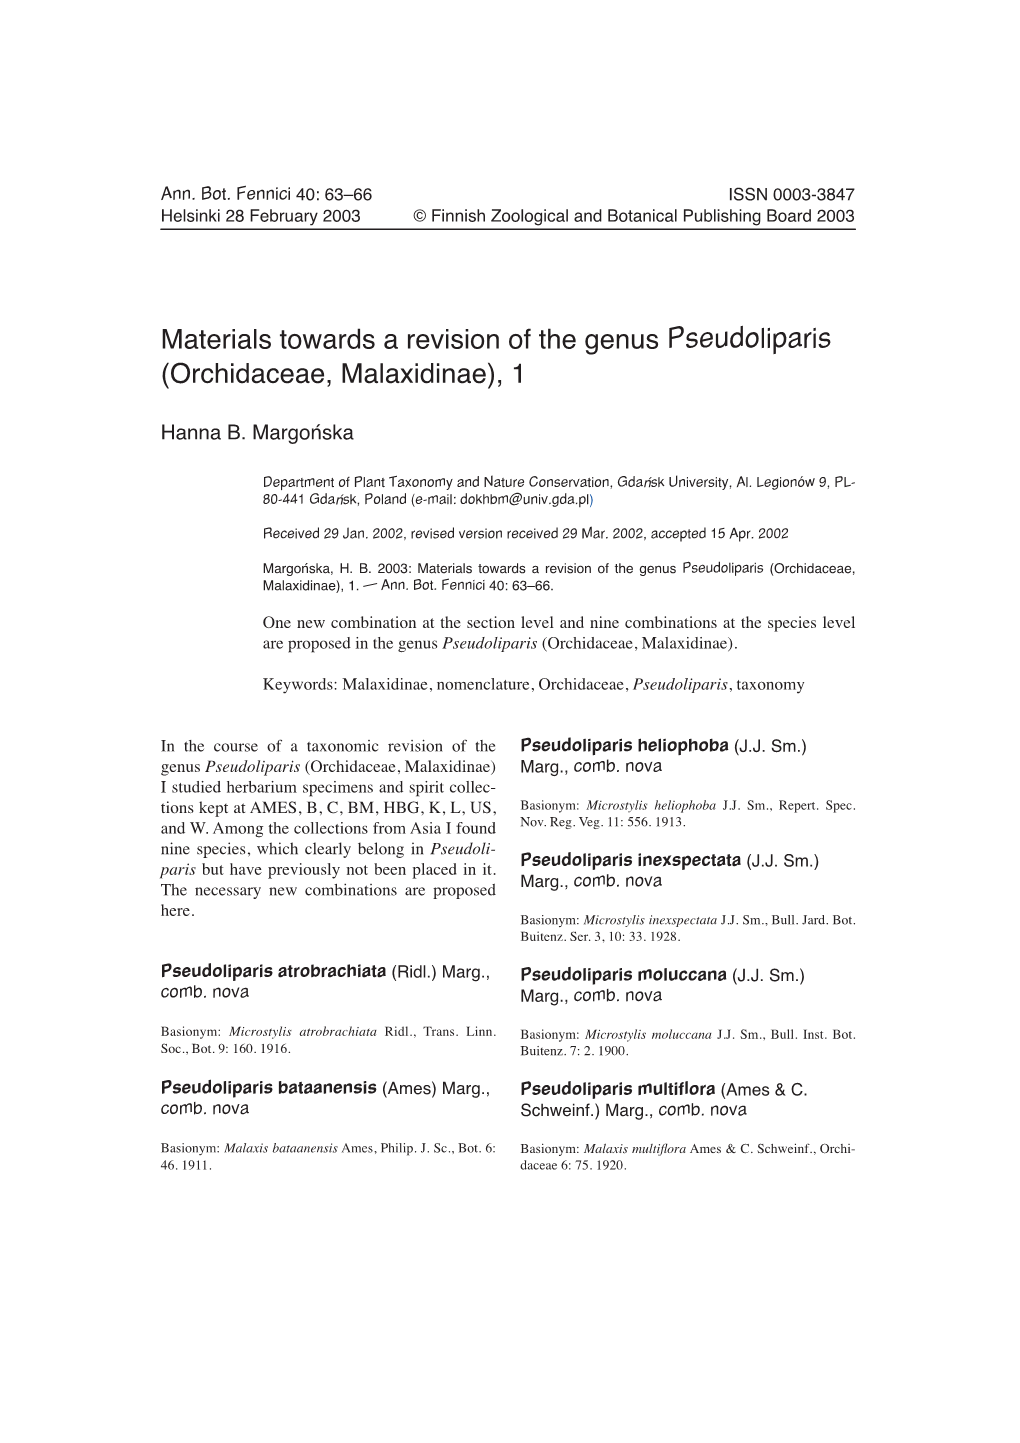 Materials Towards a Revision of the Genus Pseudoliparis (Orchidaceae, Malaxidinae), 1